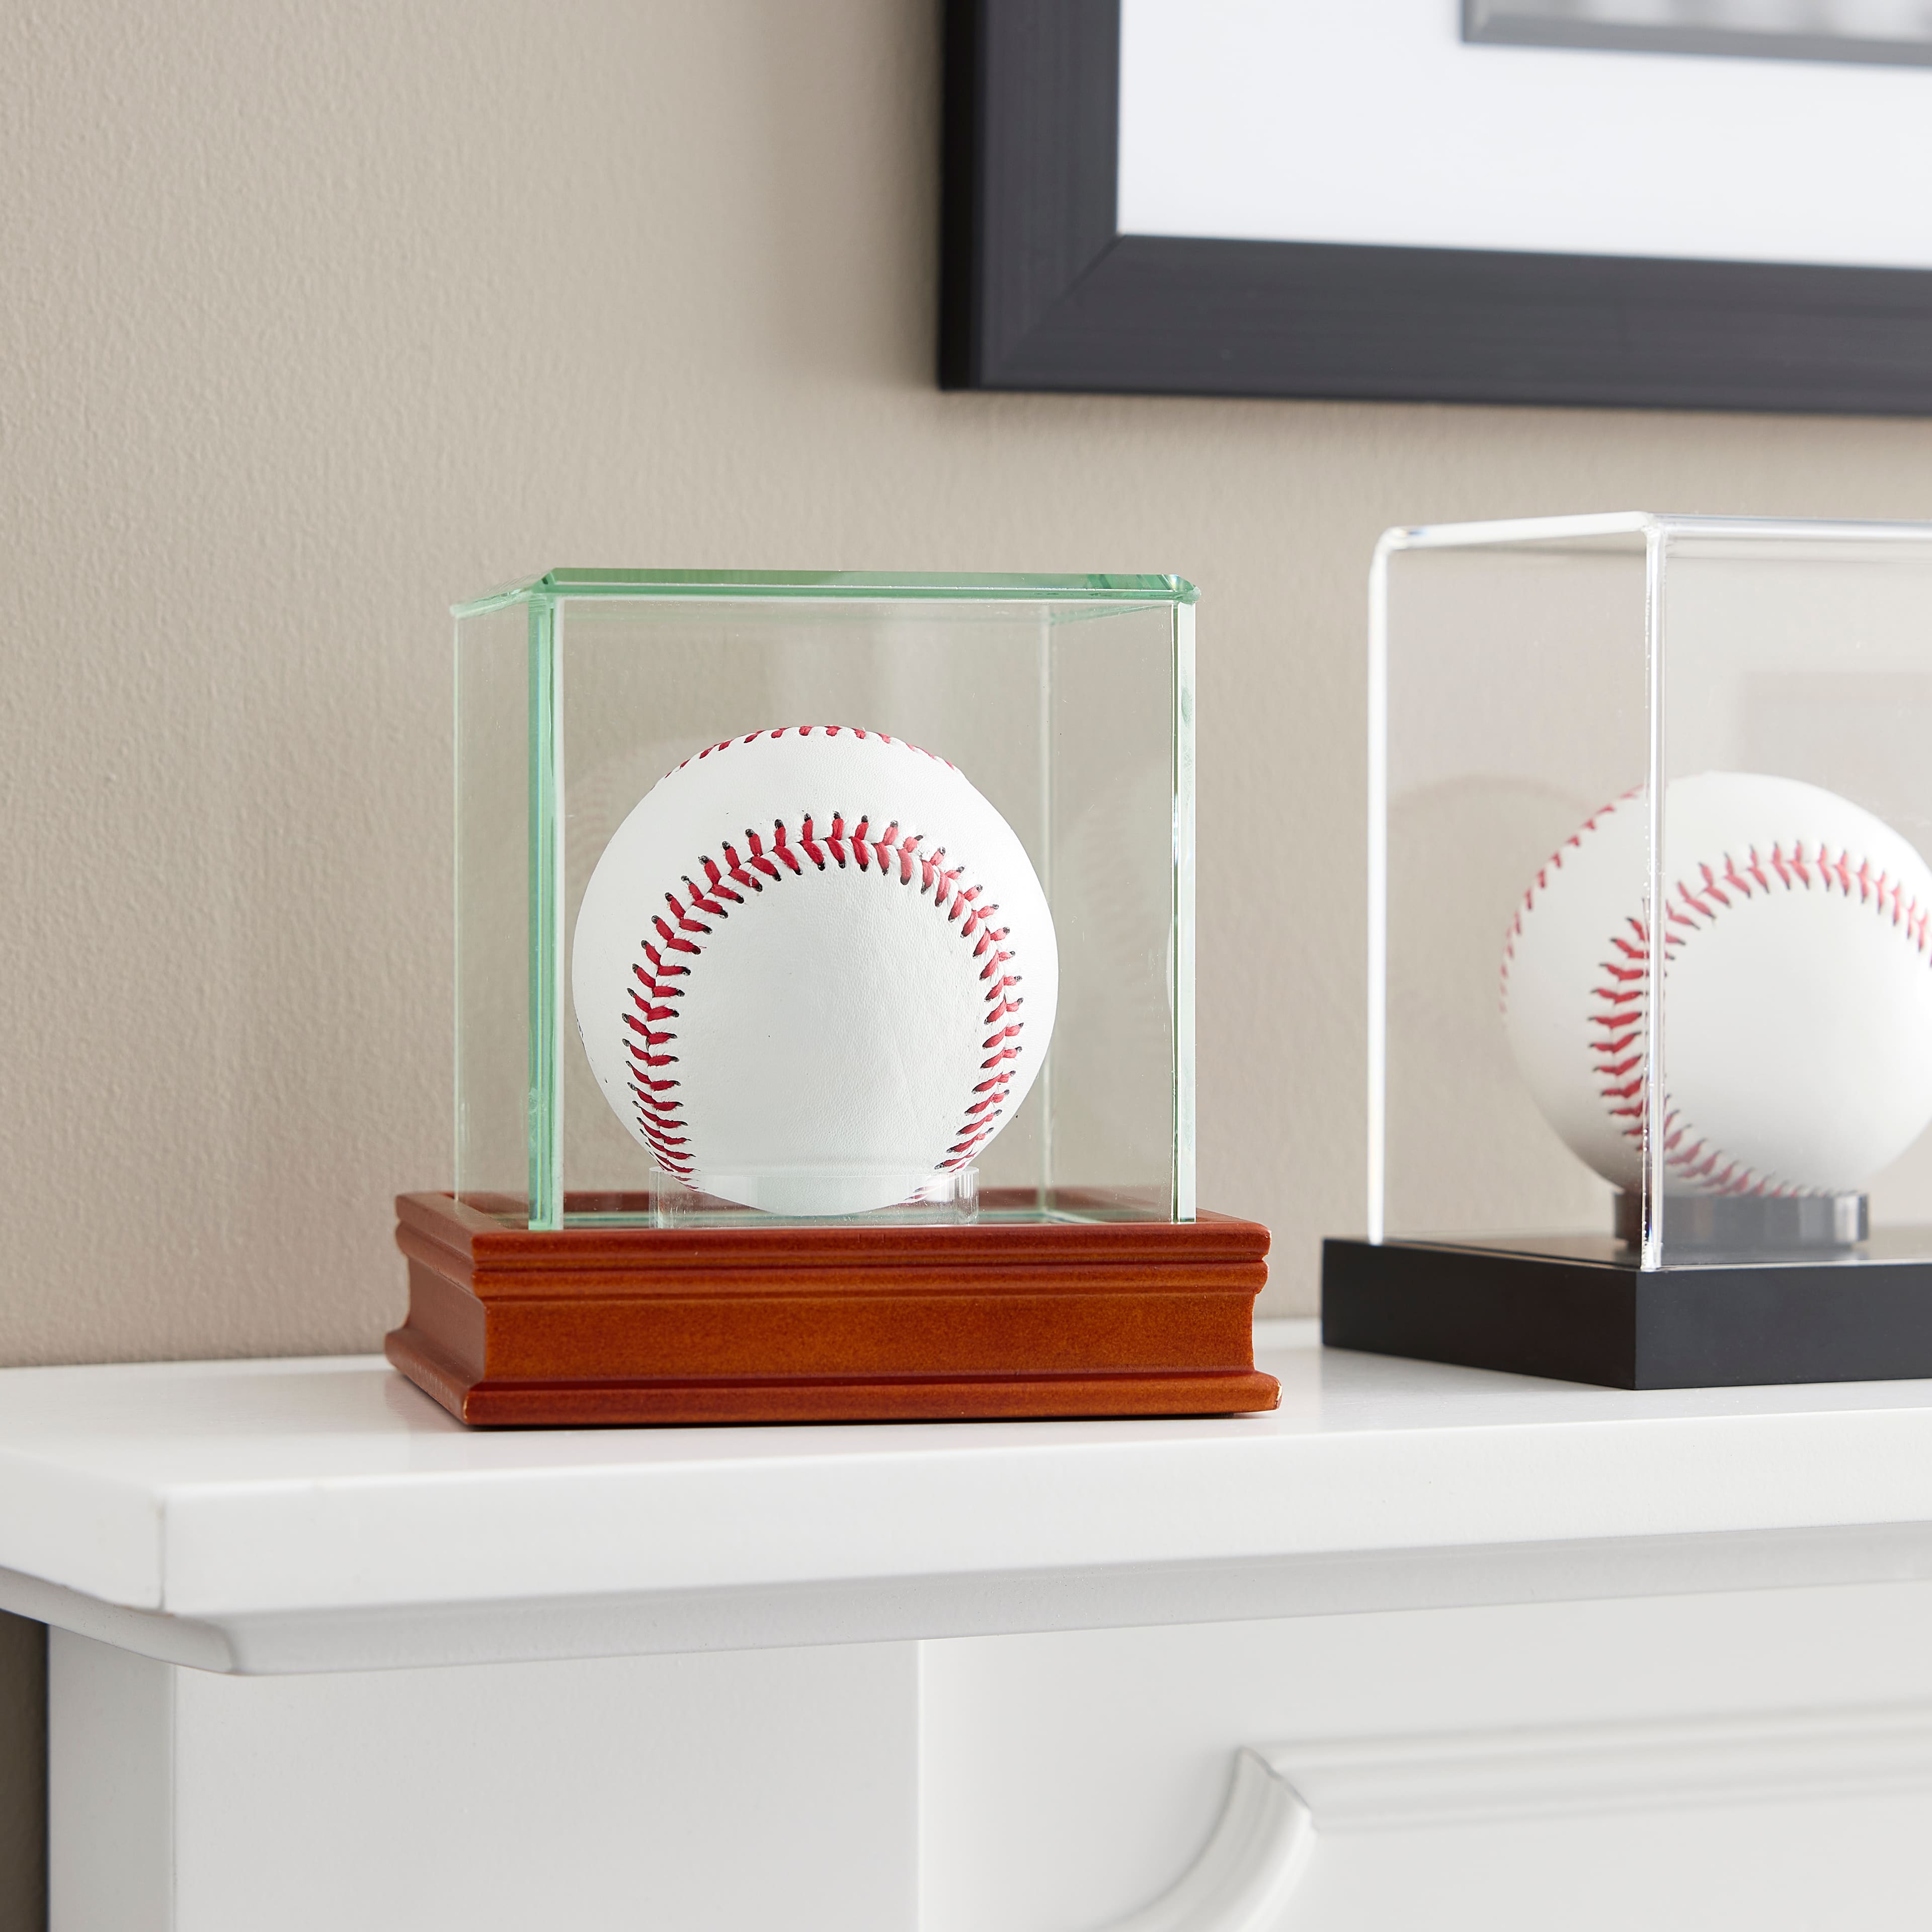 Deluxe Baseball Display Case by Studio D&#xE9;cor&#xAE;